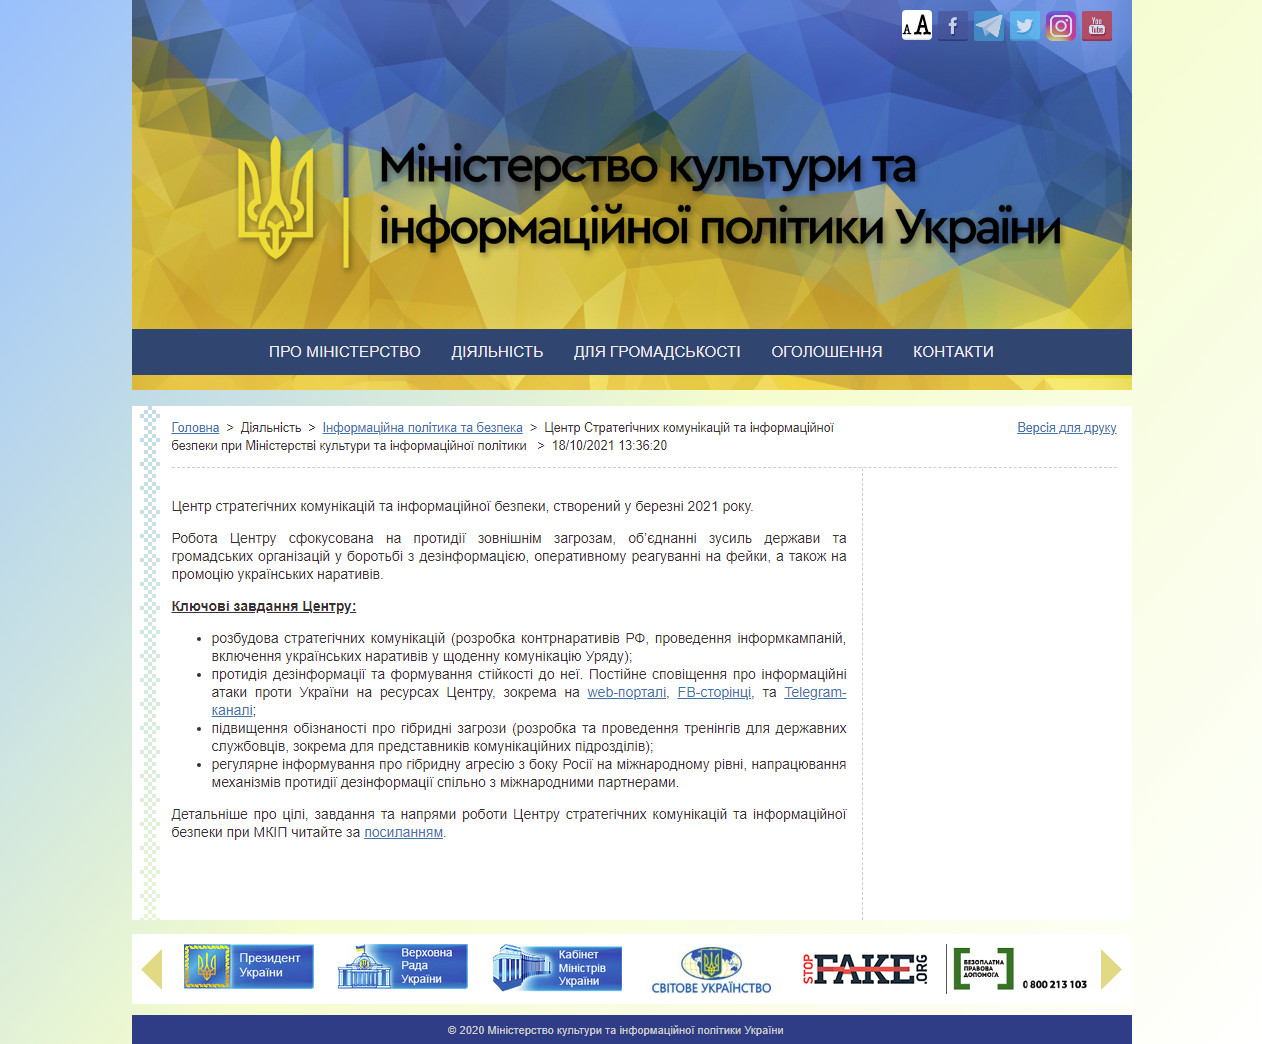 https://mkip.gov.ua/content/centr-strategichnih-komunikaciy-ta-informaciynoi-bezpeki-pri-ministerstvi-kulturi-ta-informaciynoi-politiki.html